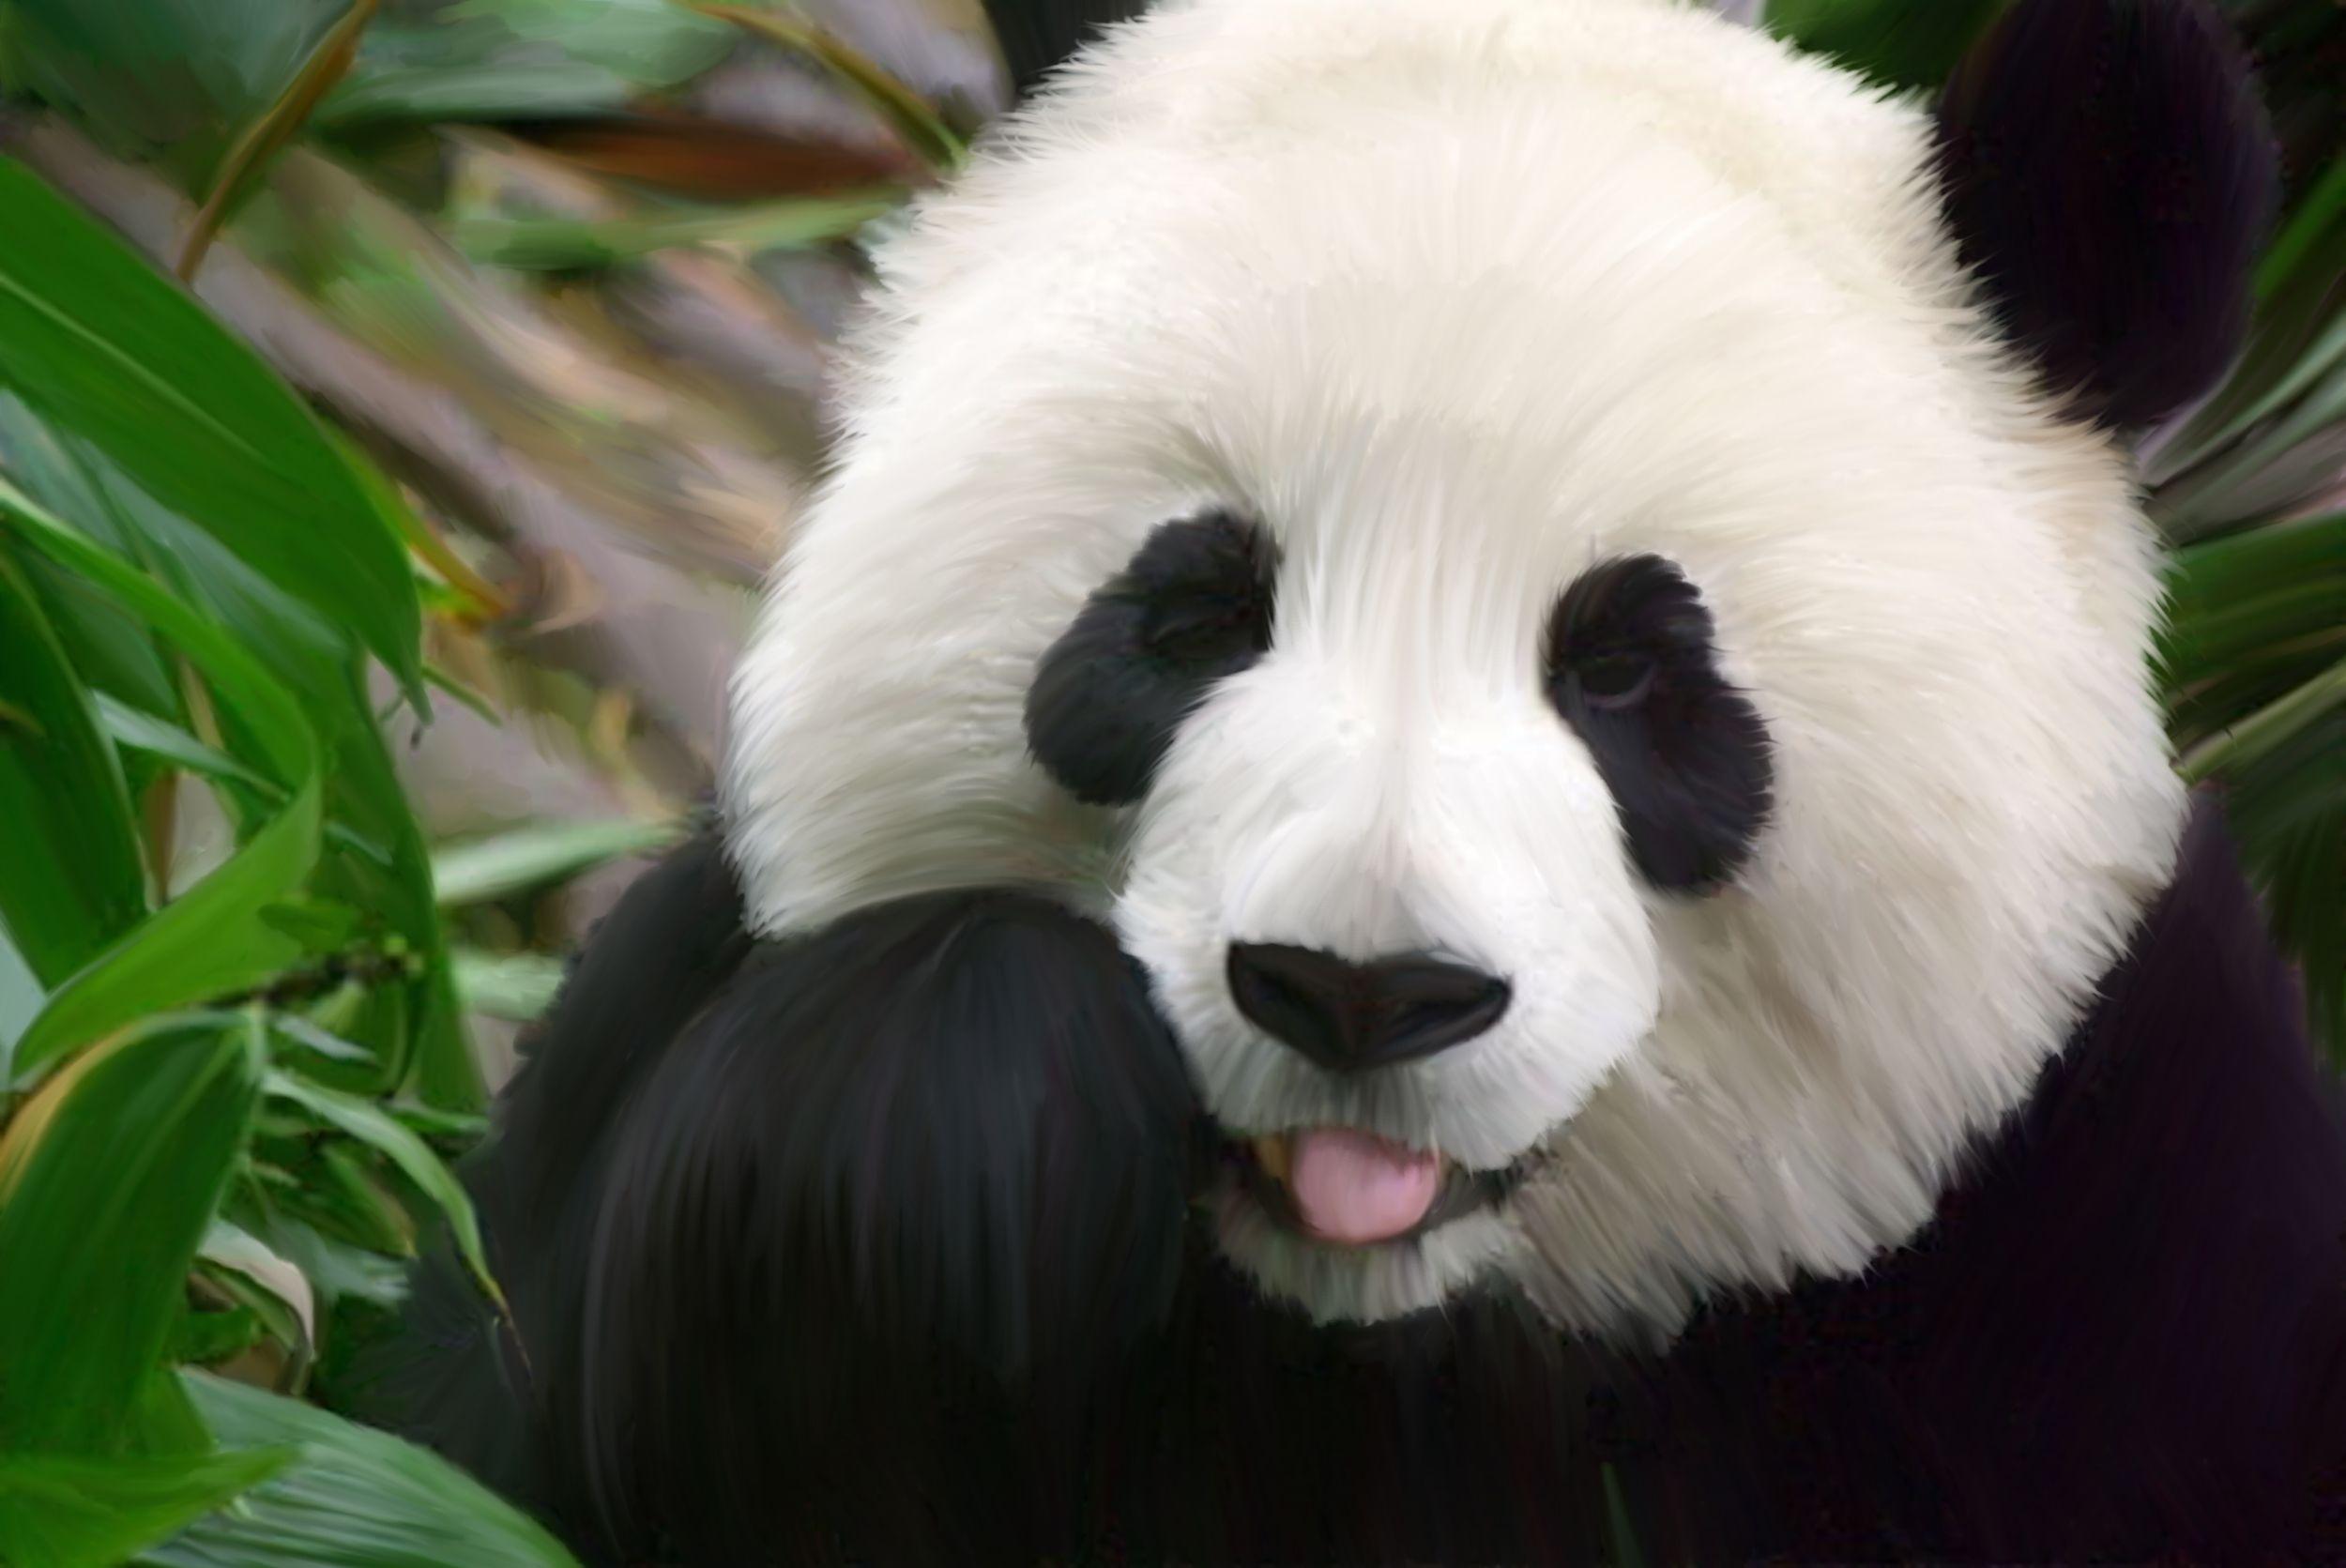 Cute Panda Images Hd Free Download : Panda Wallpapers Images Photos ...